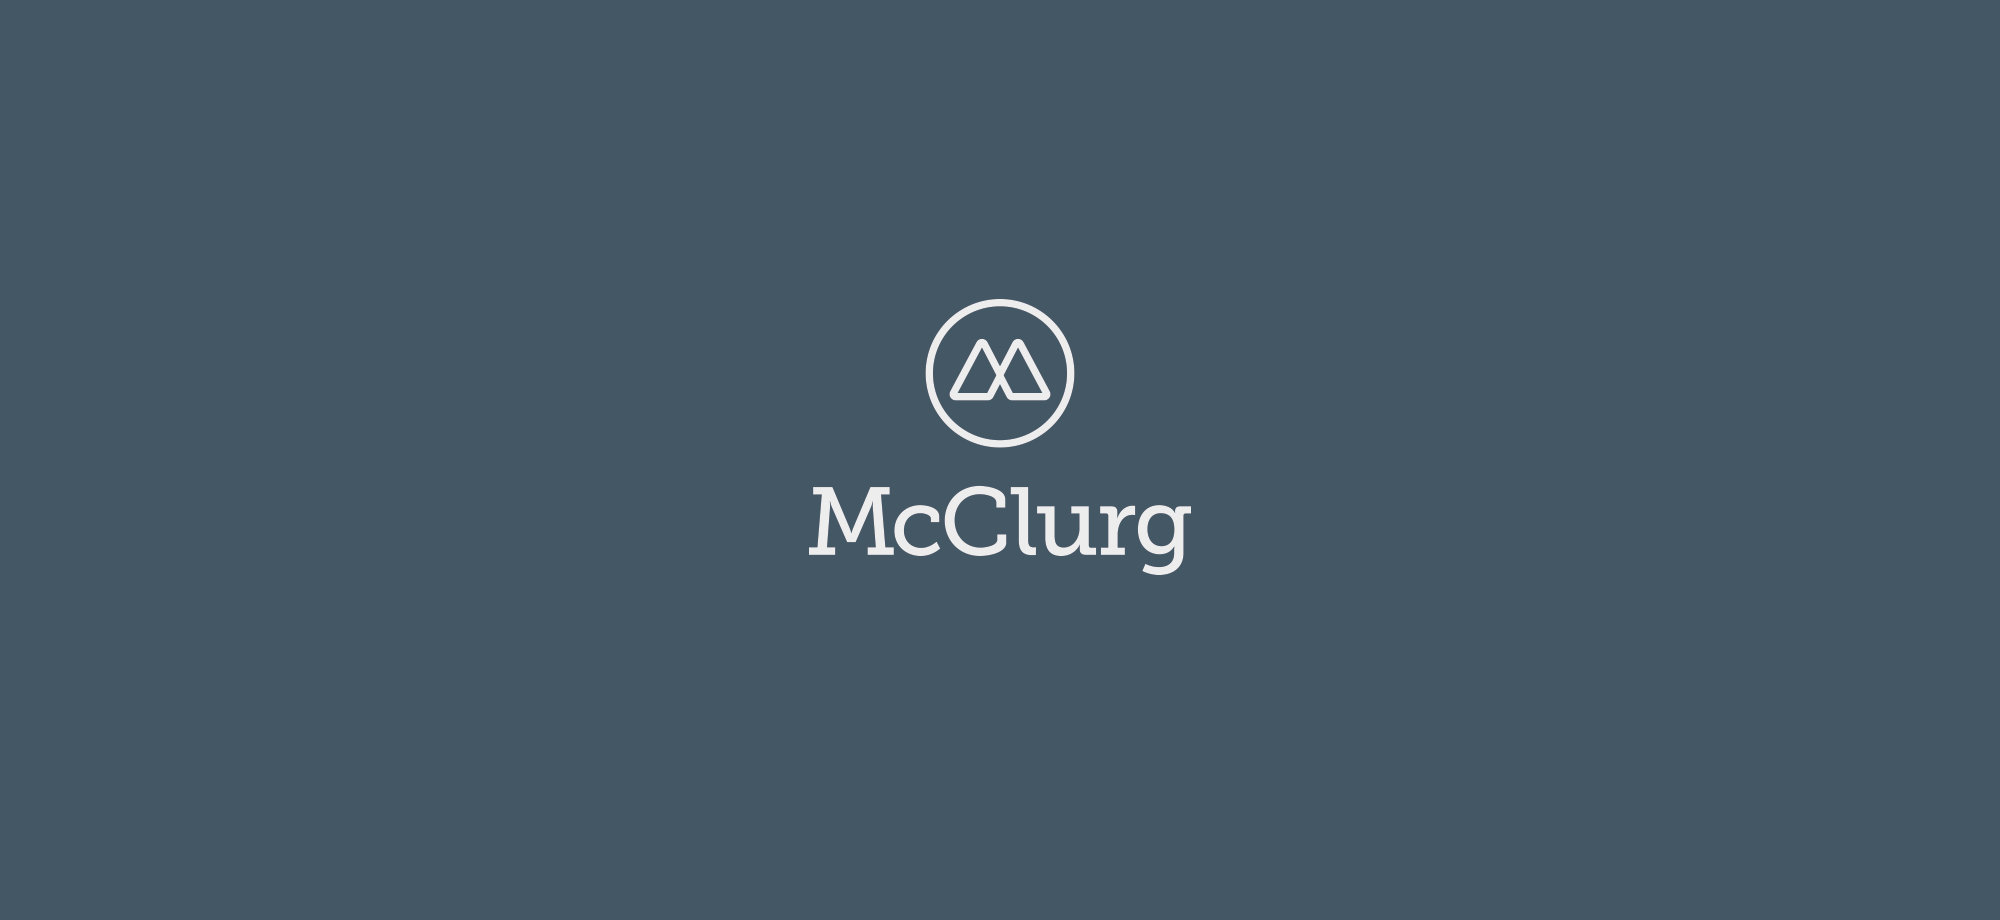 McClurg logo